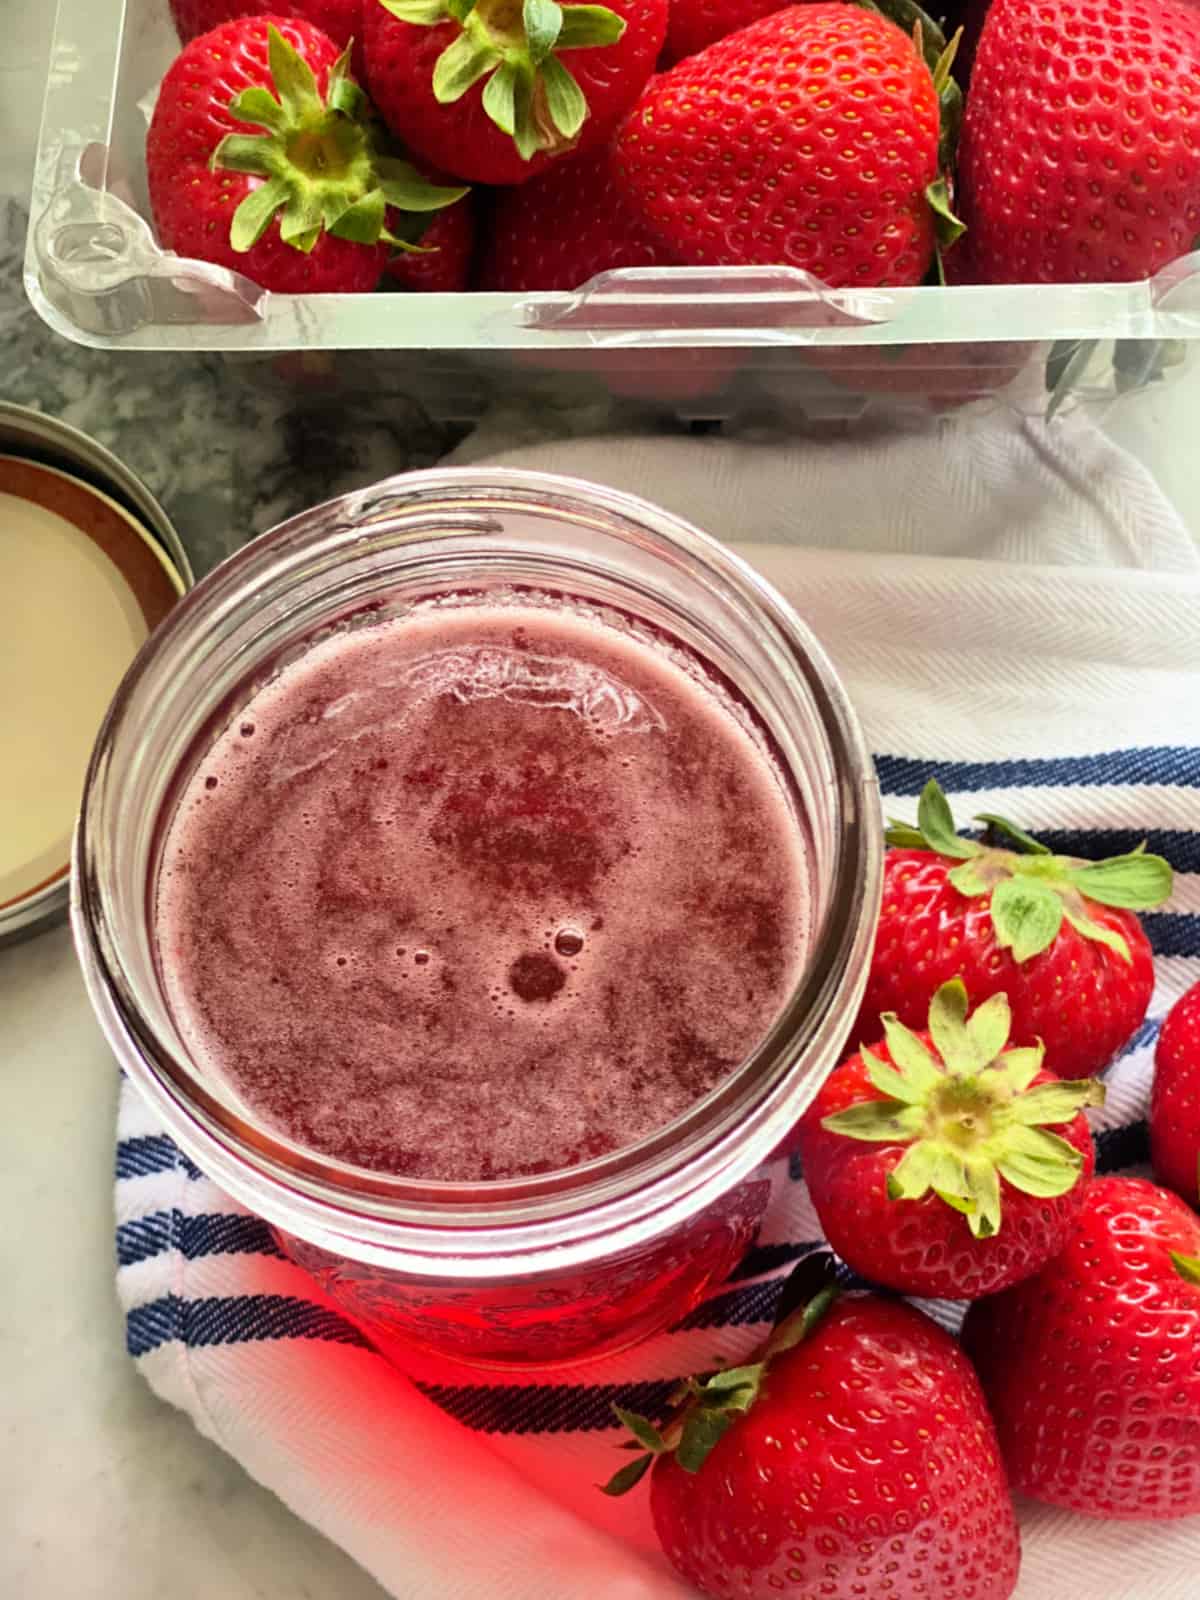 Glass mason jar with pink liquid and fresh strawberries surround the jar.